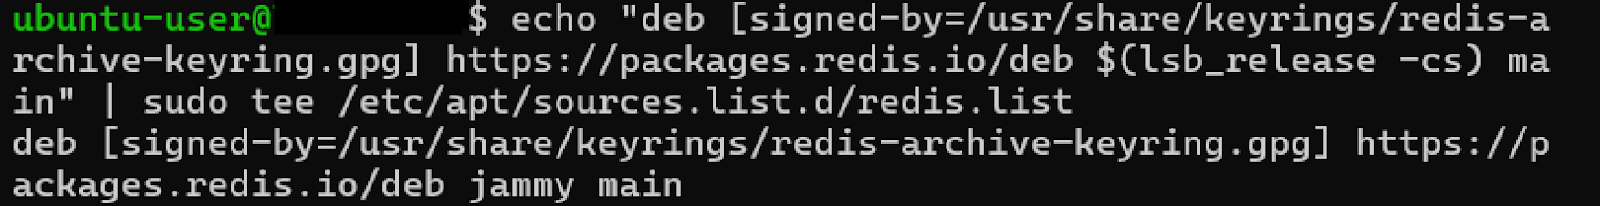 echo "deb [signed-by=/usr/share/keyrings/redis-archive-keyring.gpg]